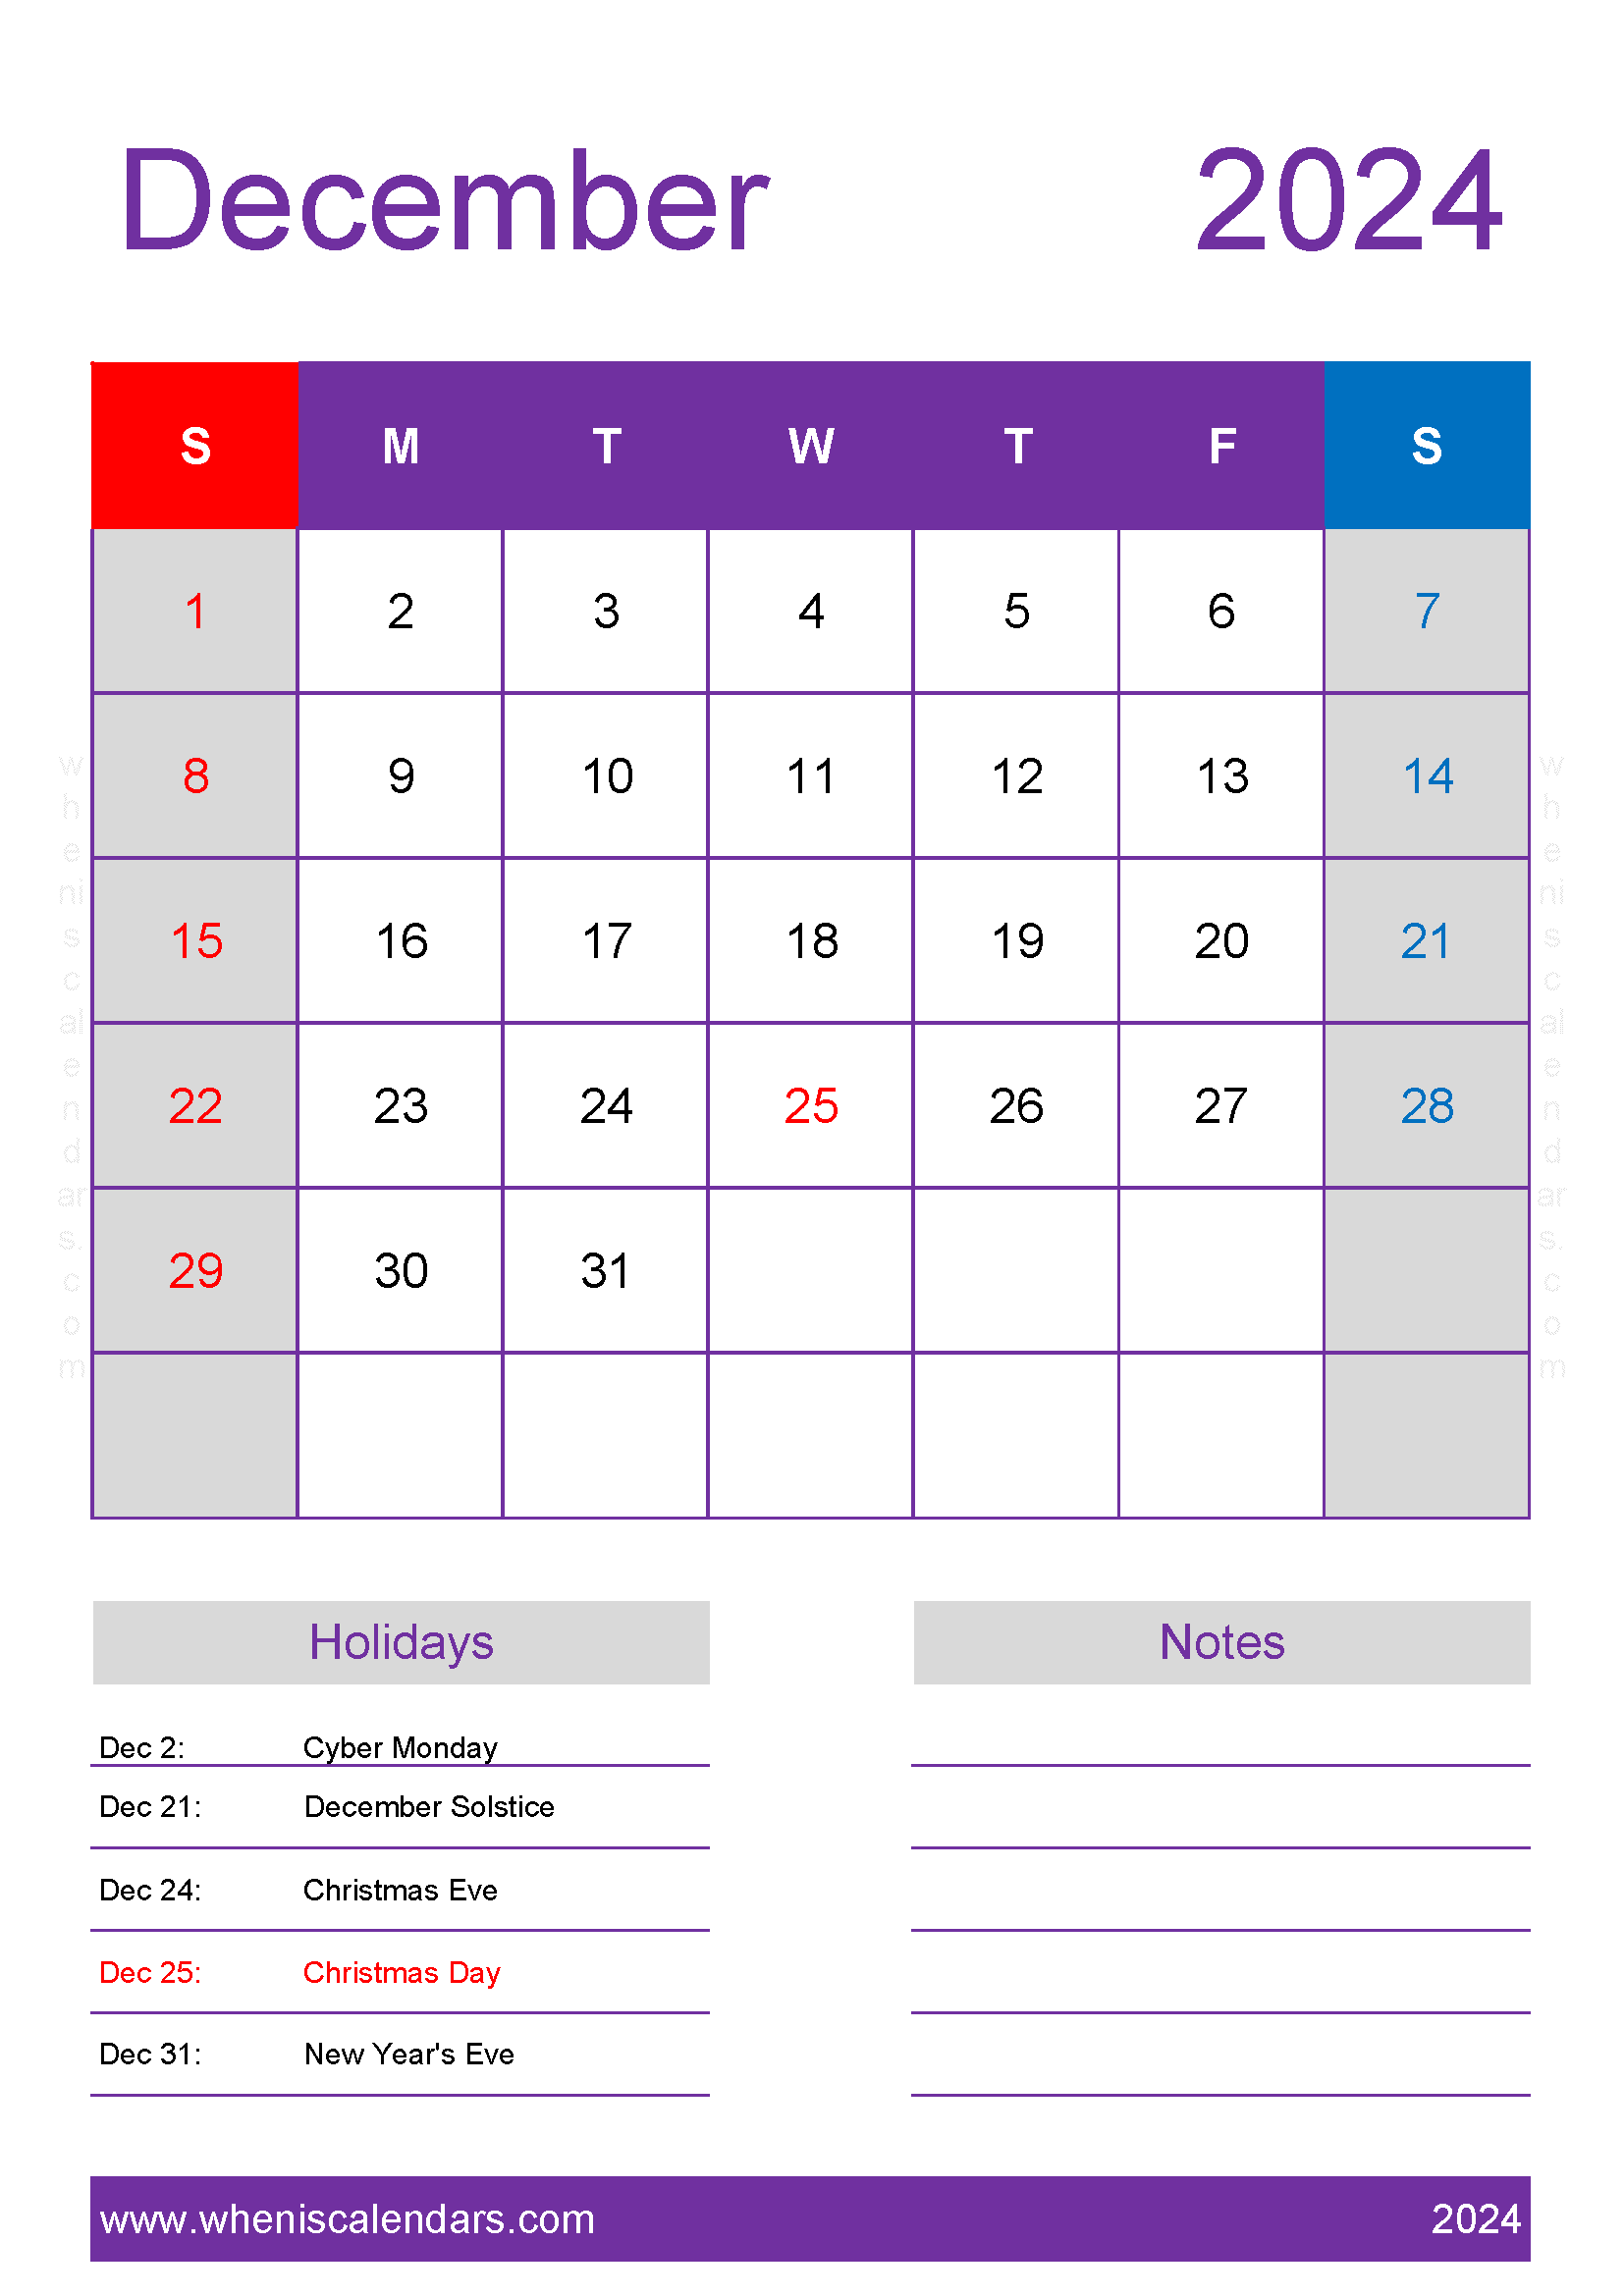 December 2024 Calendar in excel Monthly Calendar